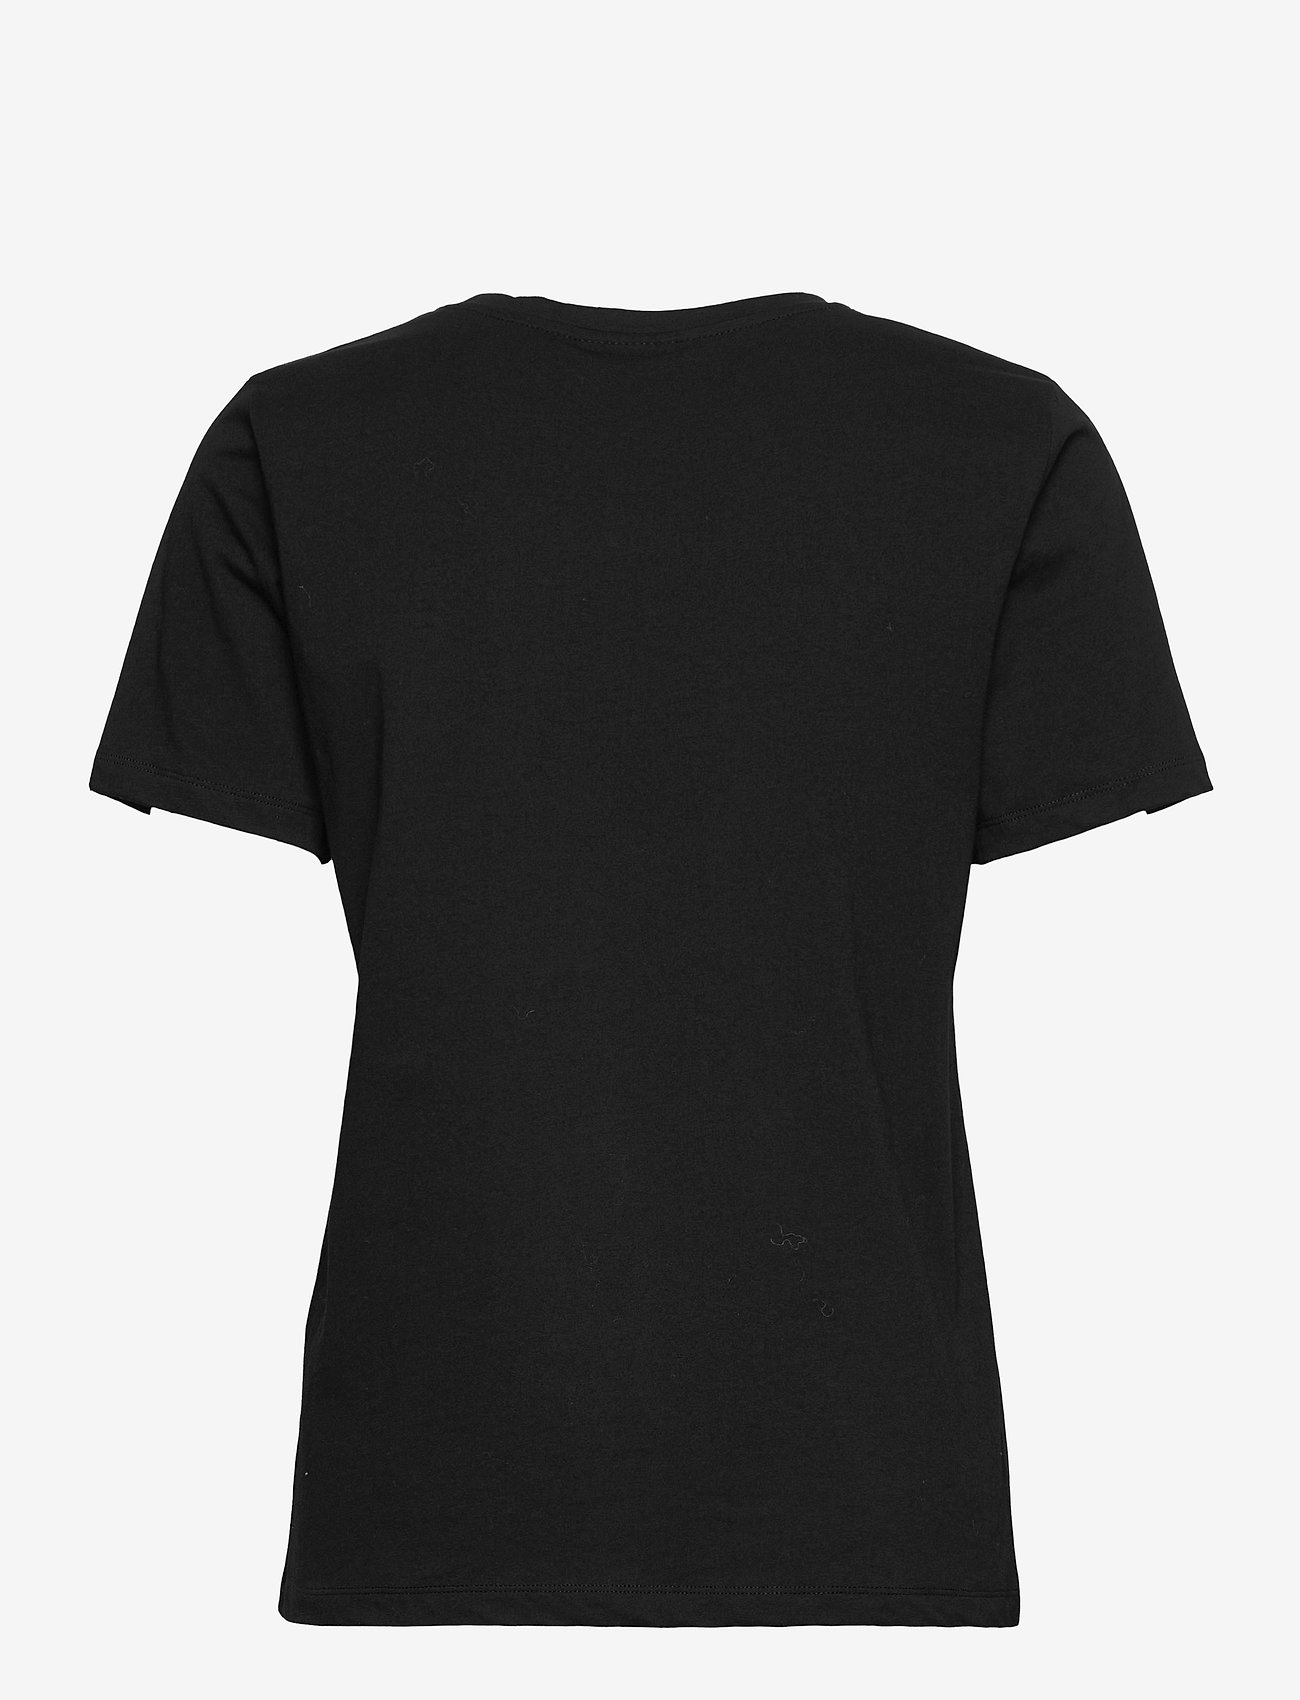 Munthe - DARLING - t-shirt & tops - black - 2